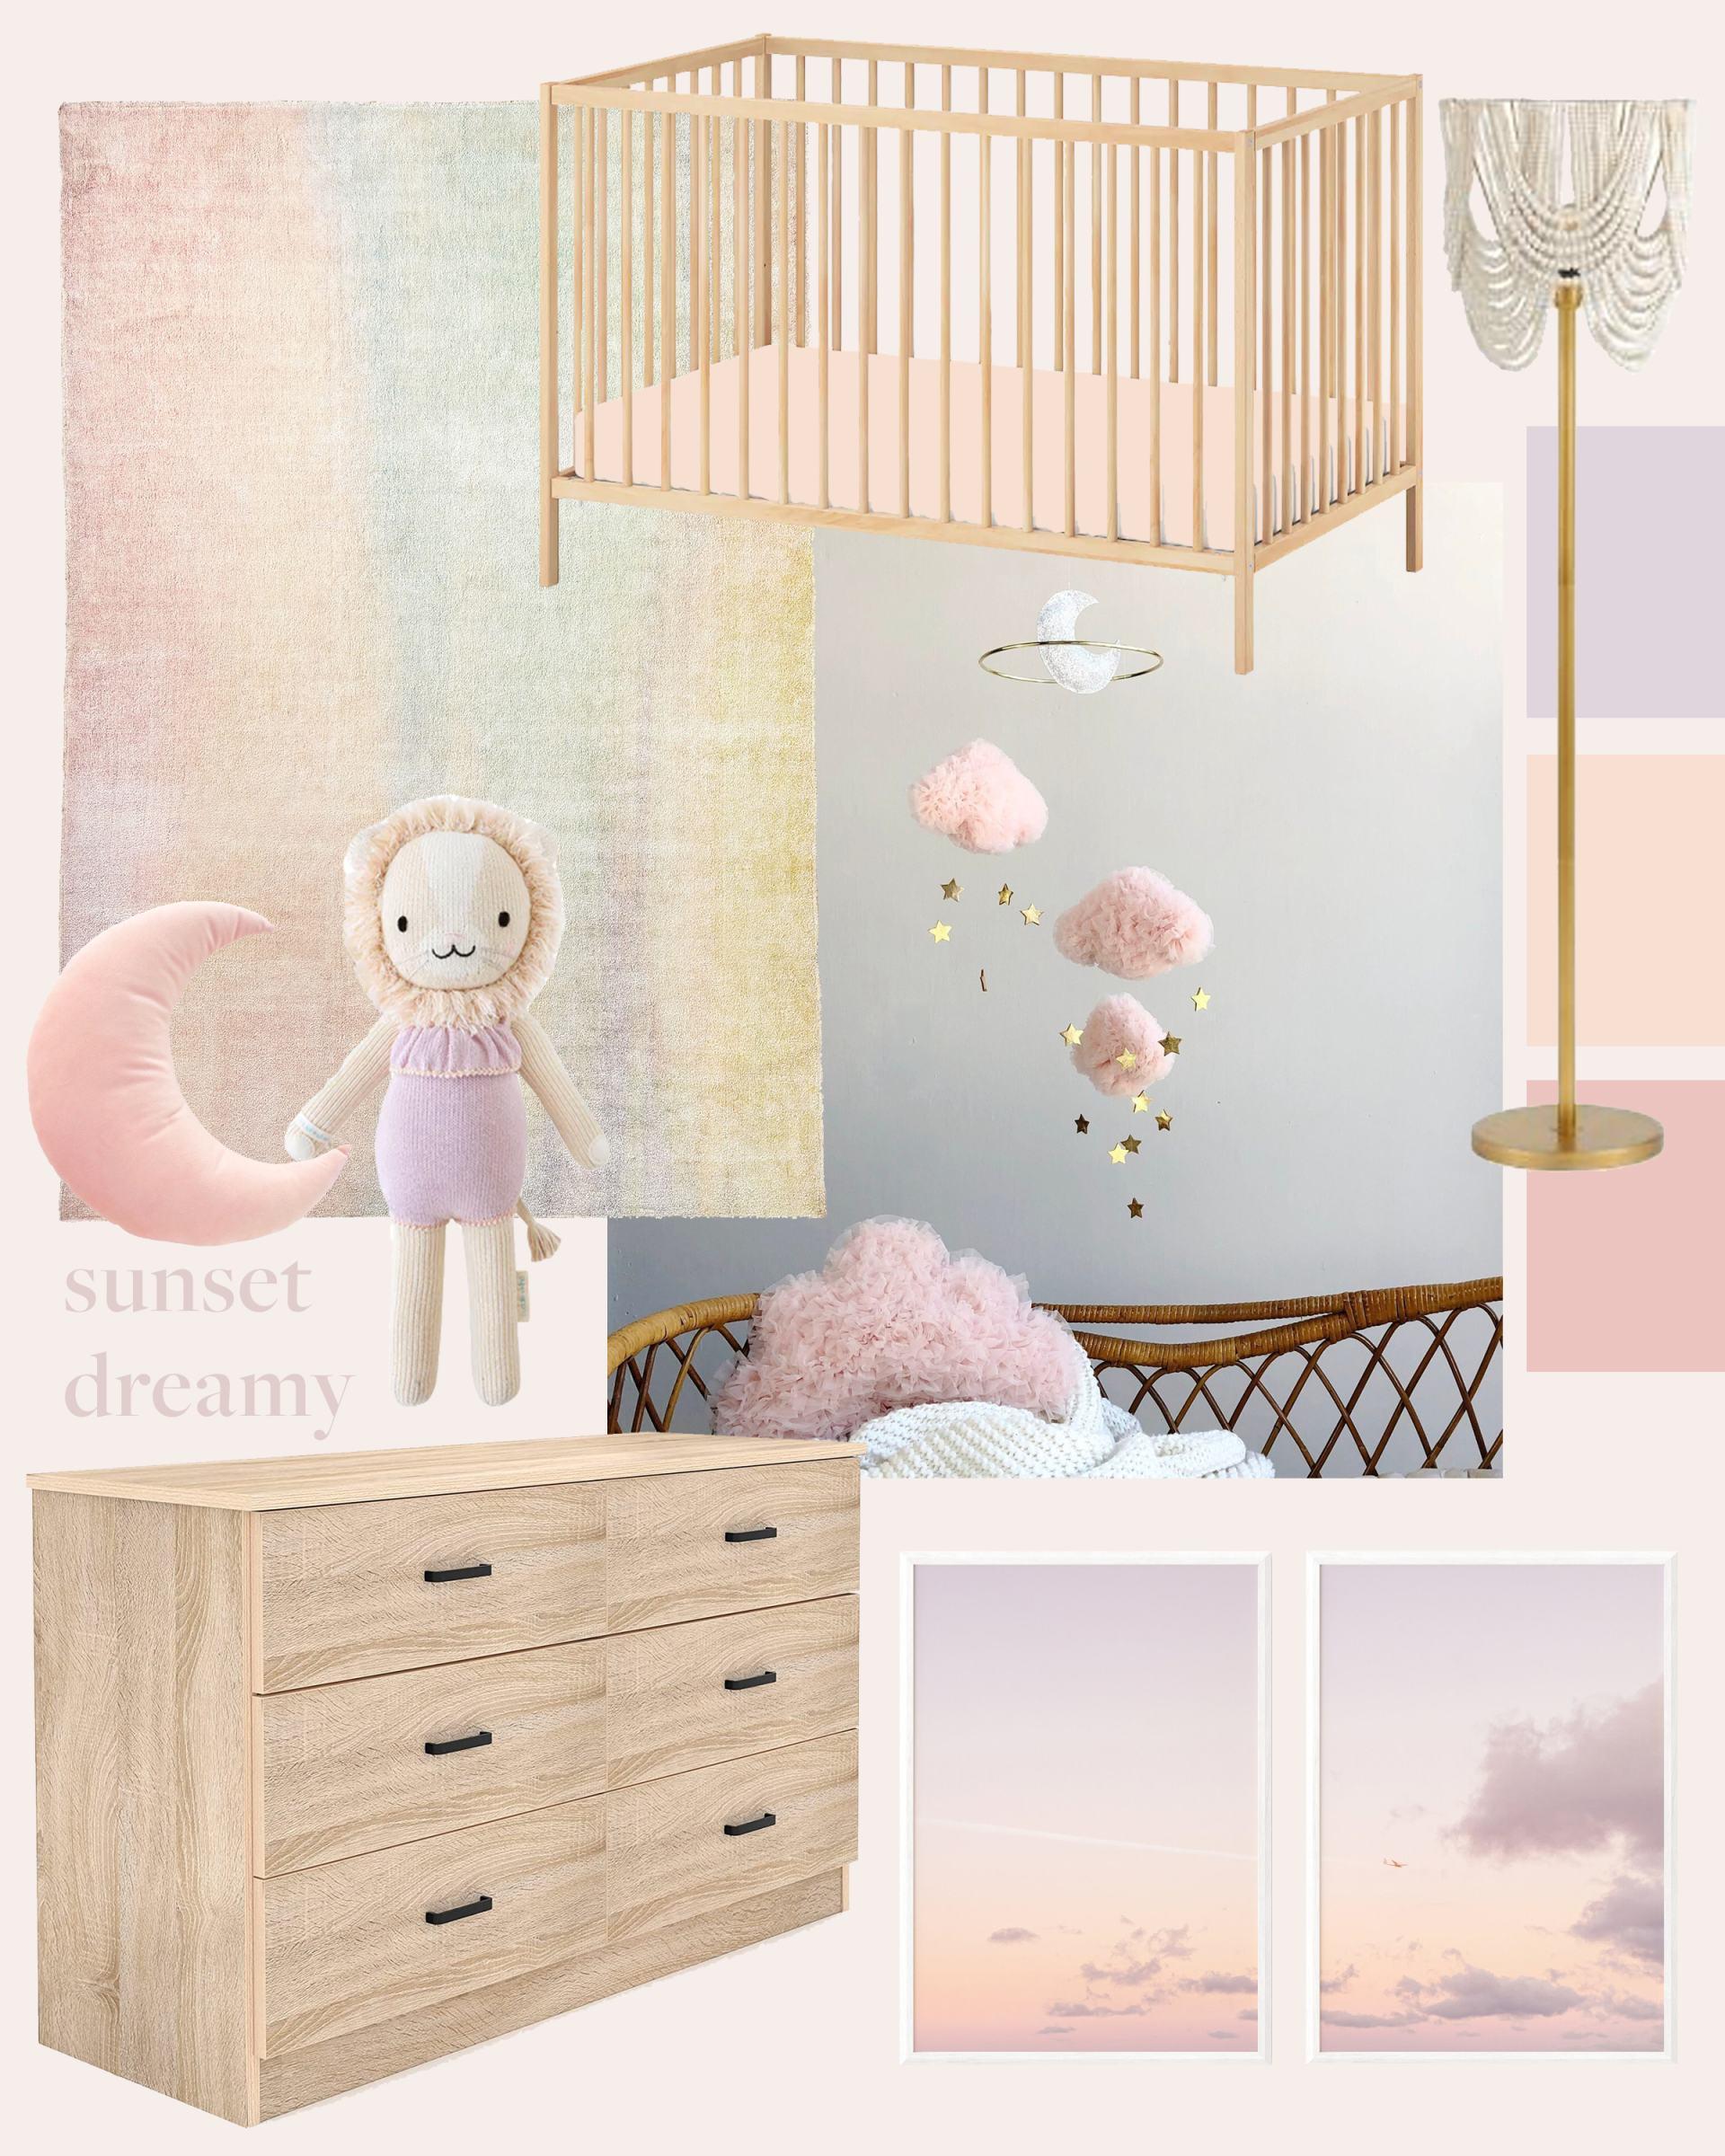 Baby Girl Nursery Inspiration: Dreamy Sunset